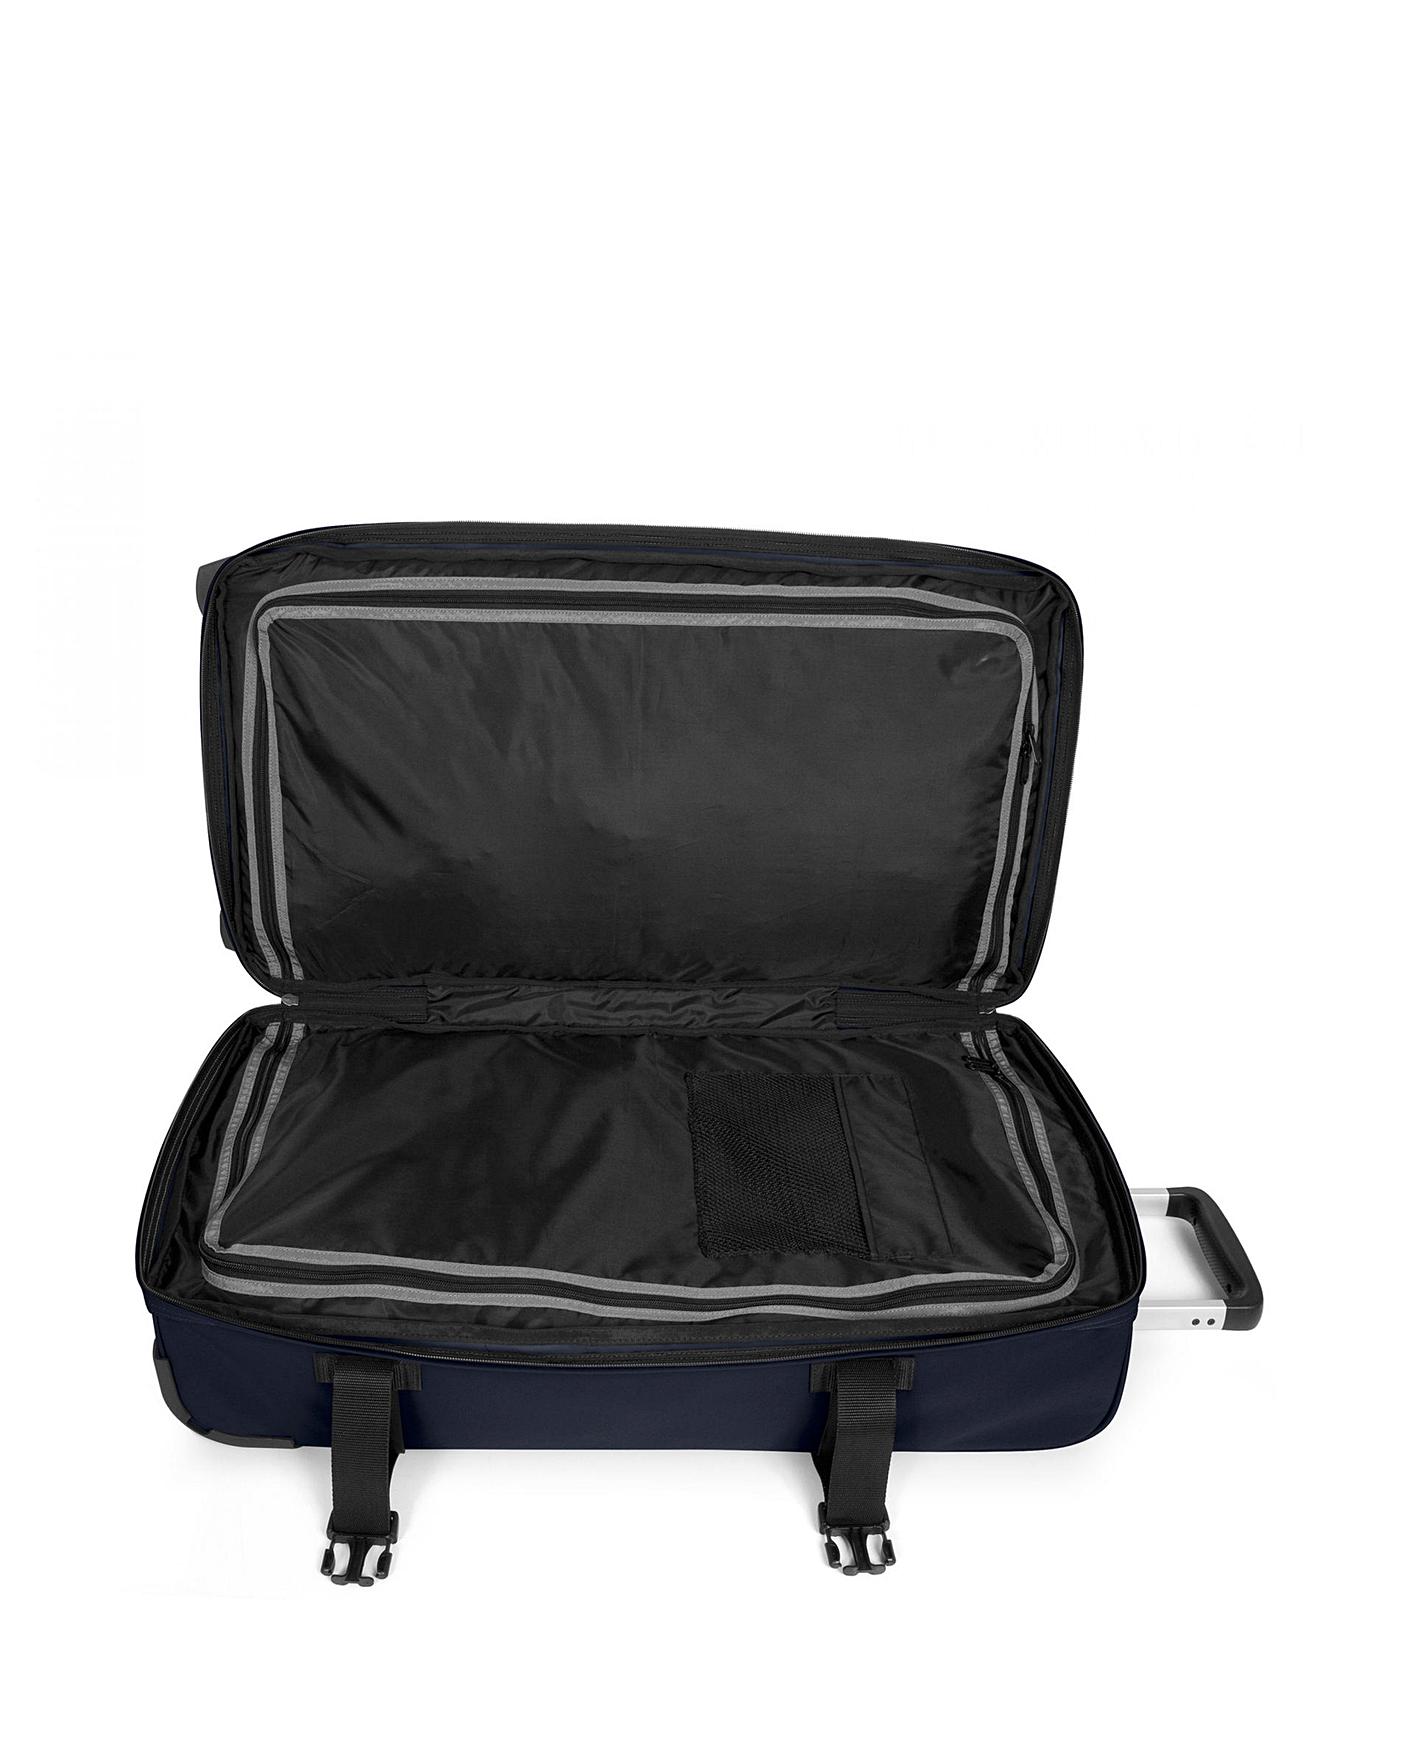 EASTPAK Tranverz S Suitcase, Ultra Marine, One Size, TRANVERZ S